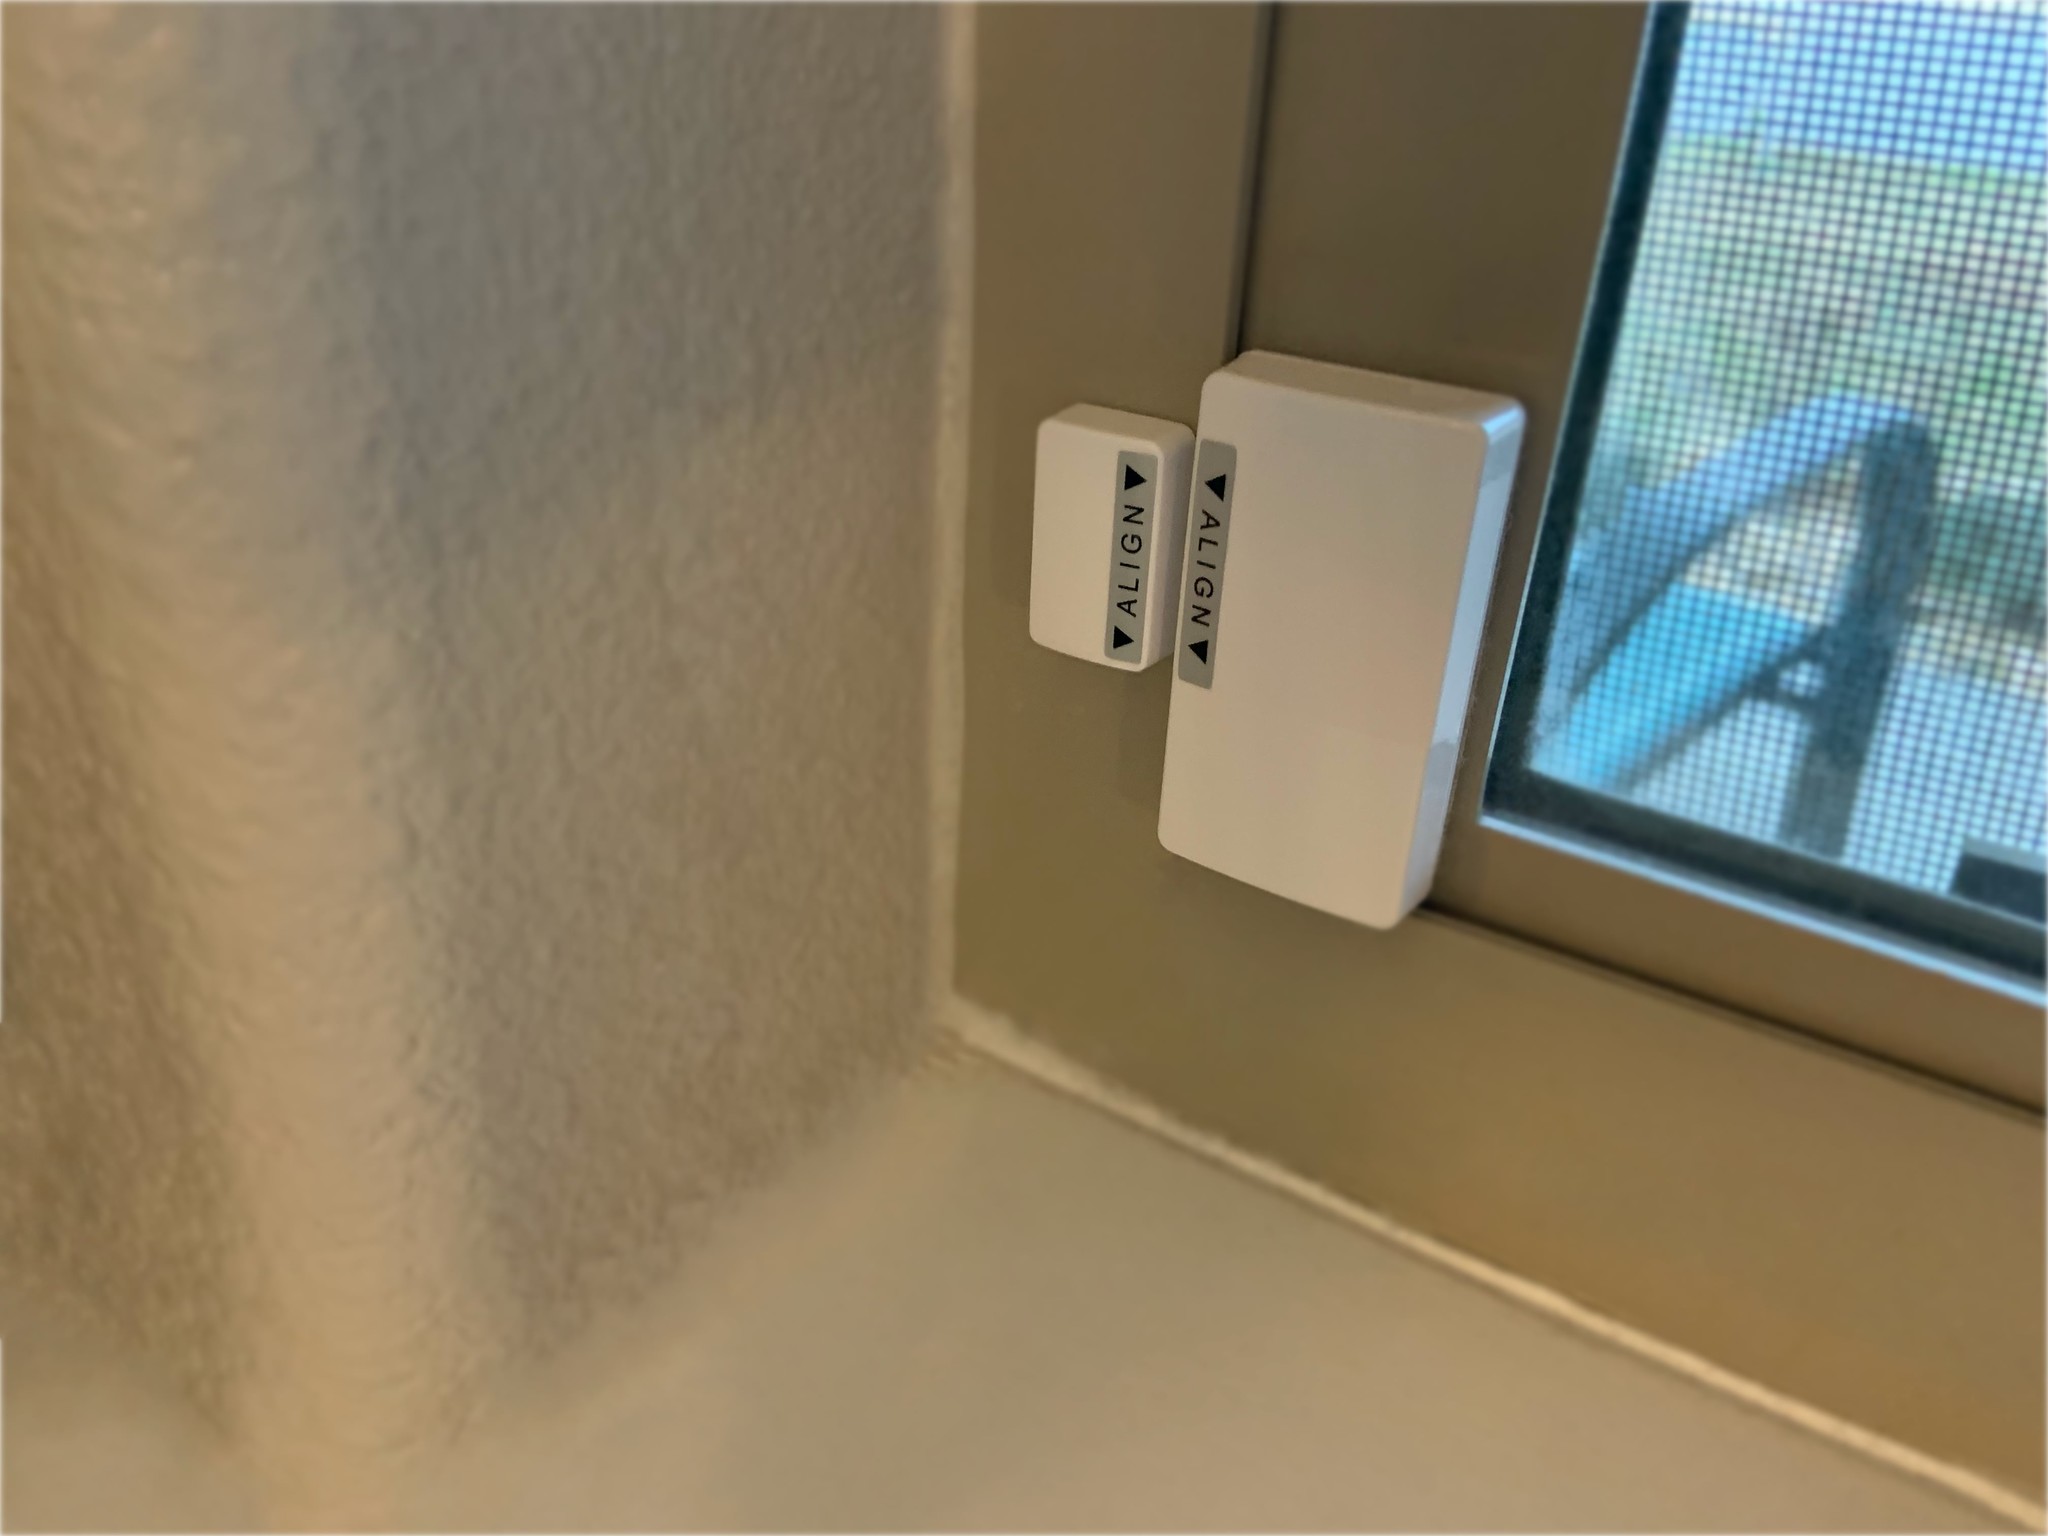 Abode Wireless Mini Sensor installed on a window